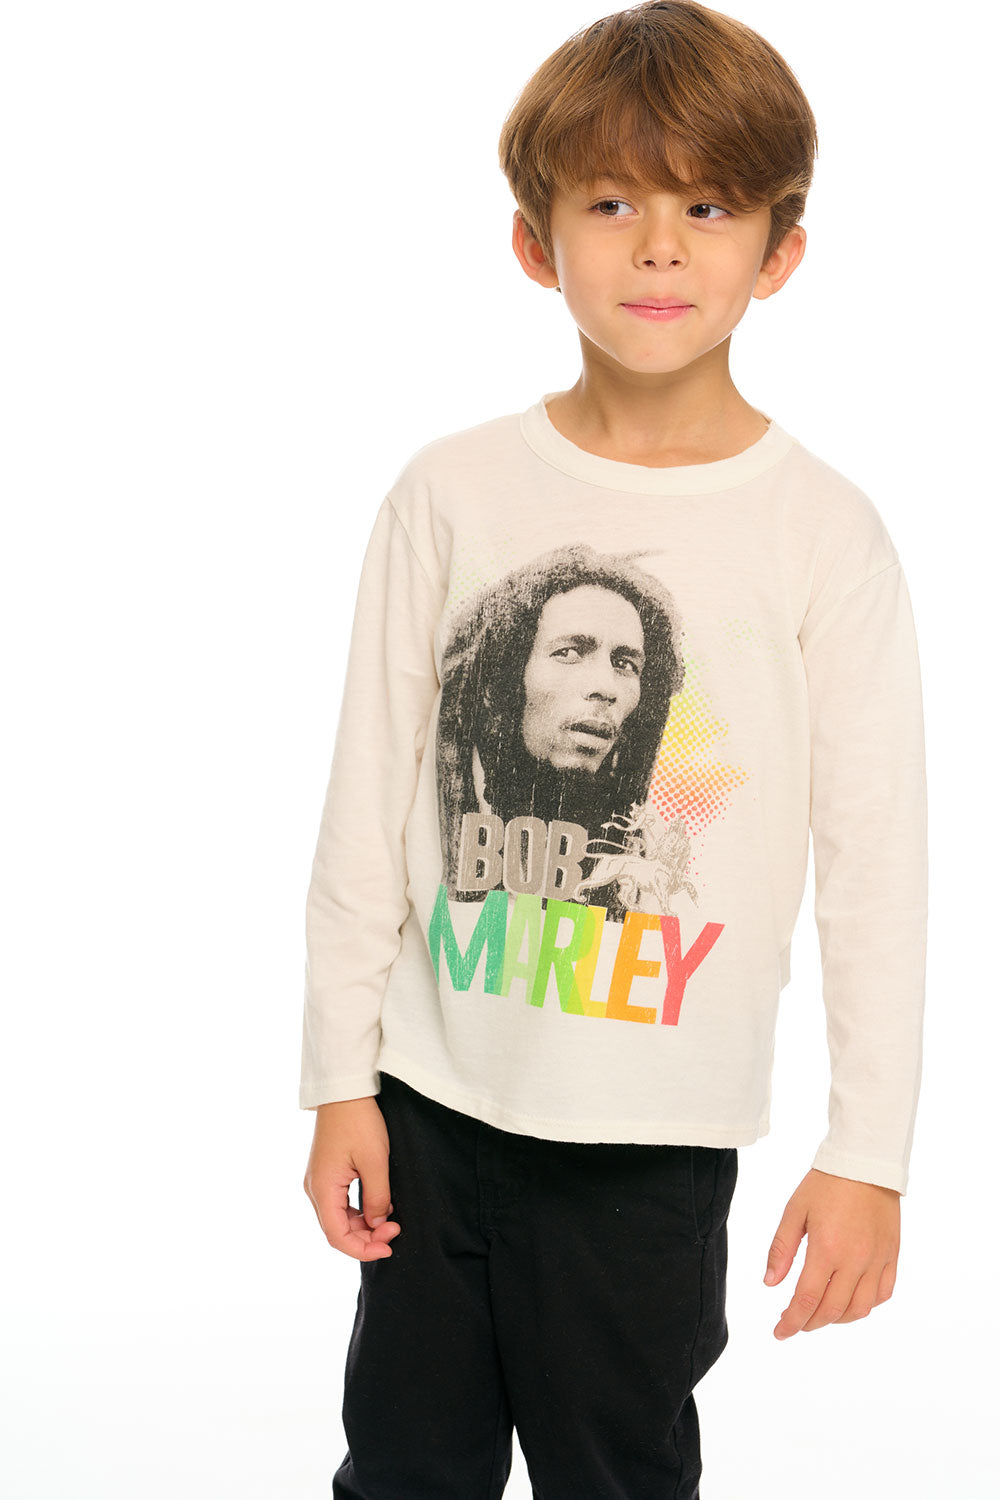 Bob Marley - Rasta BOYS chaserbrand